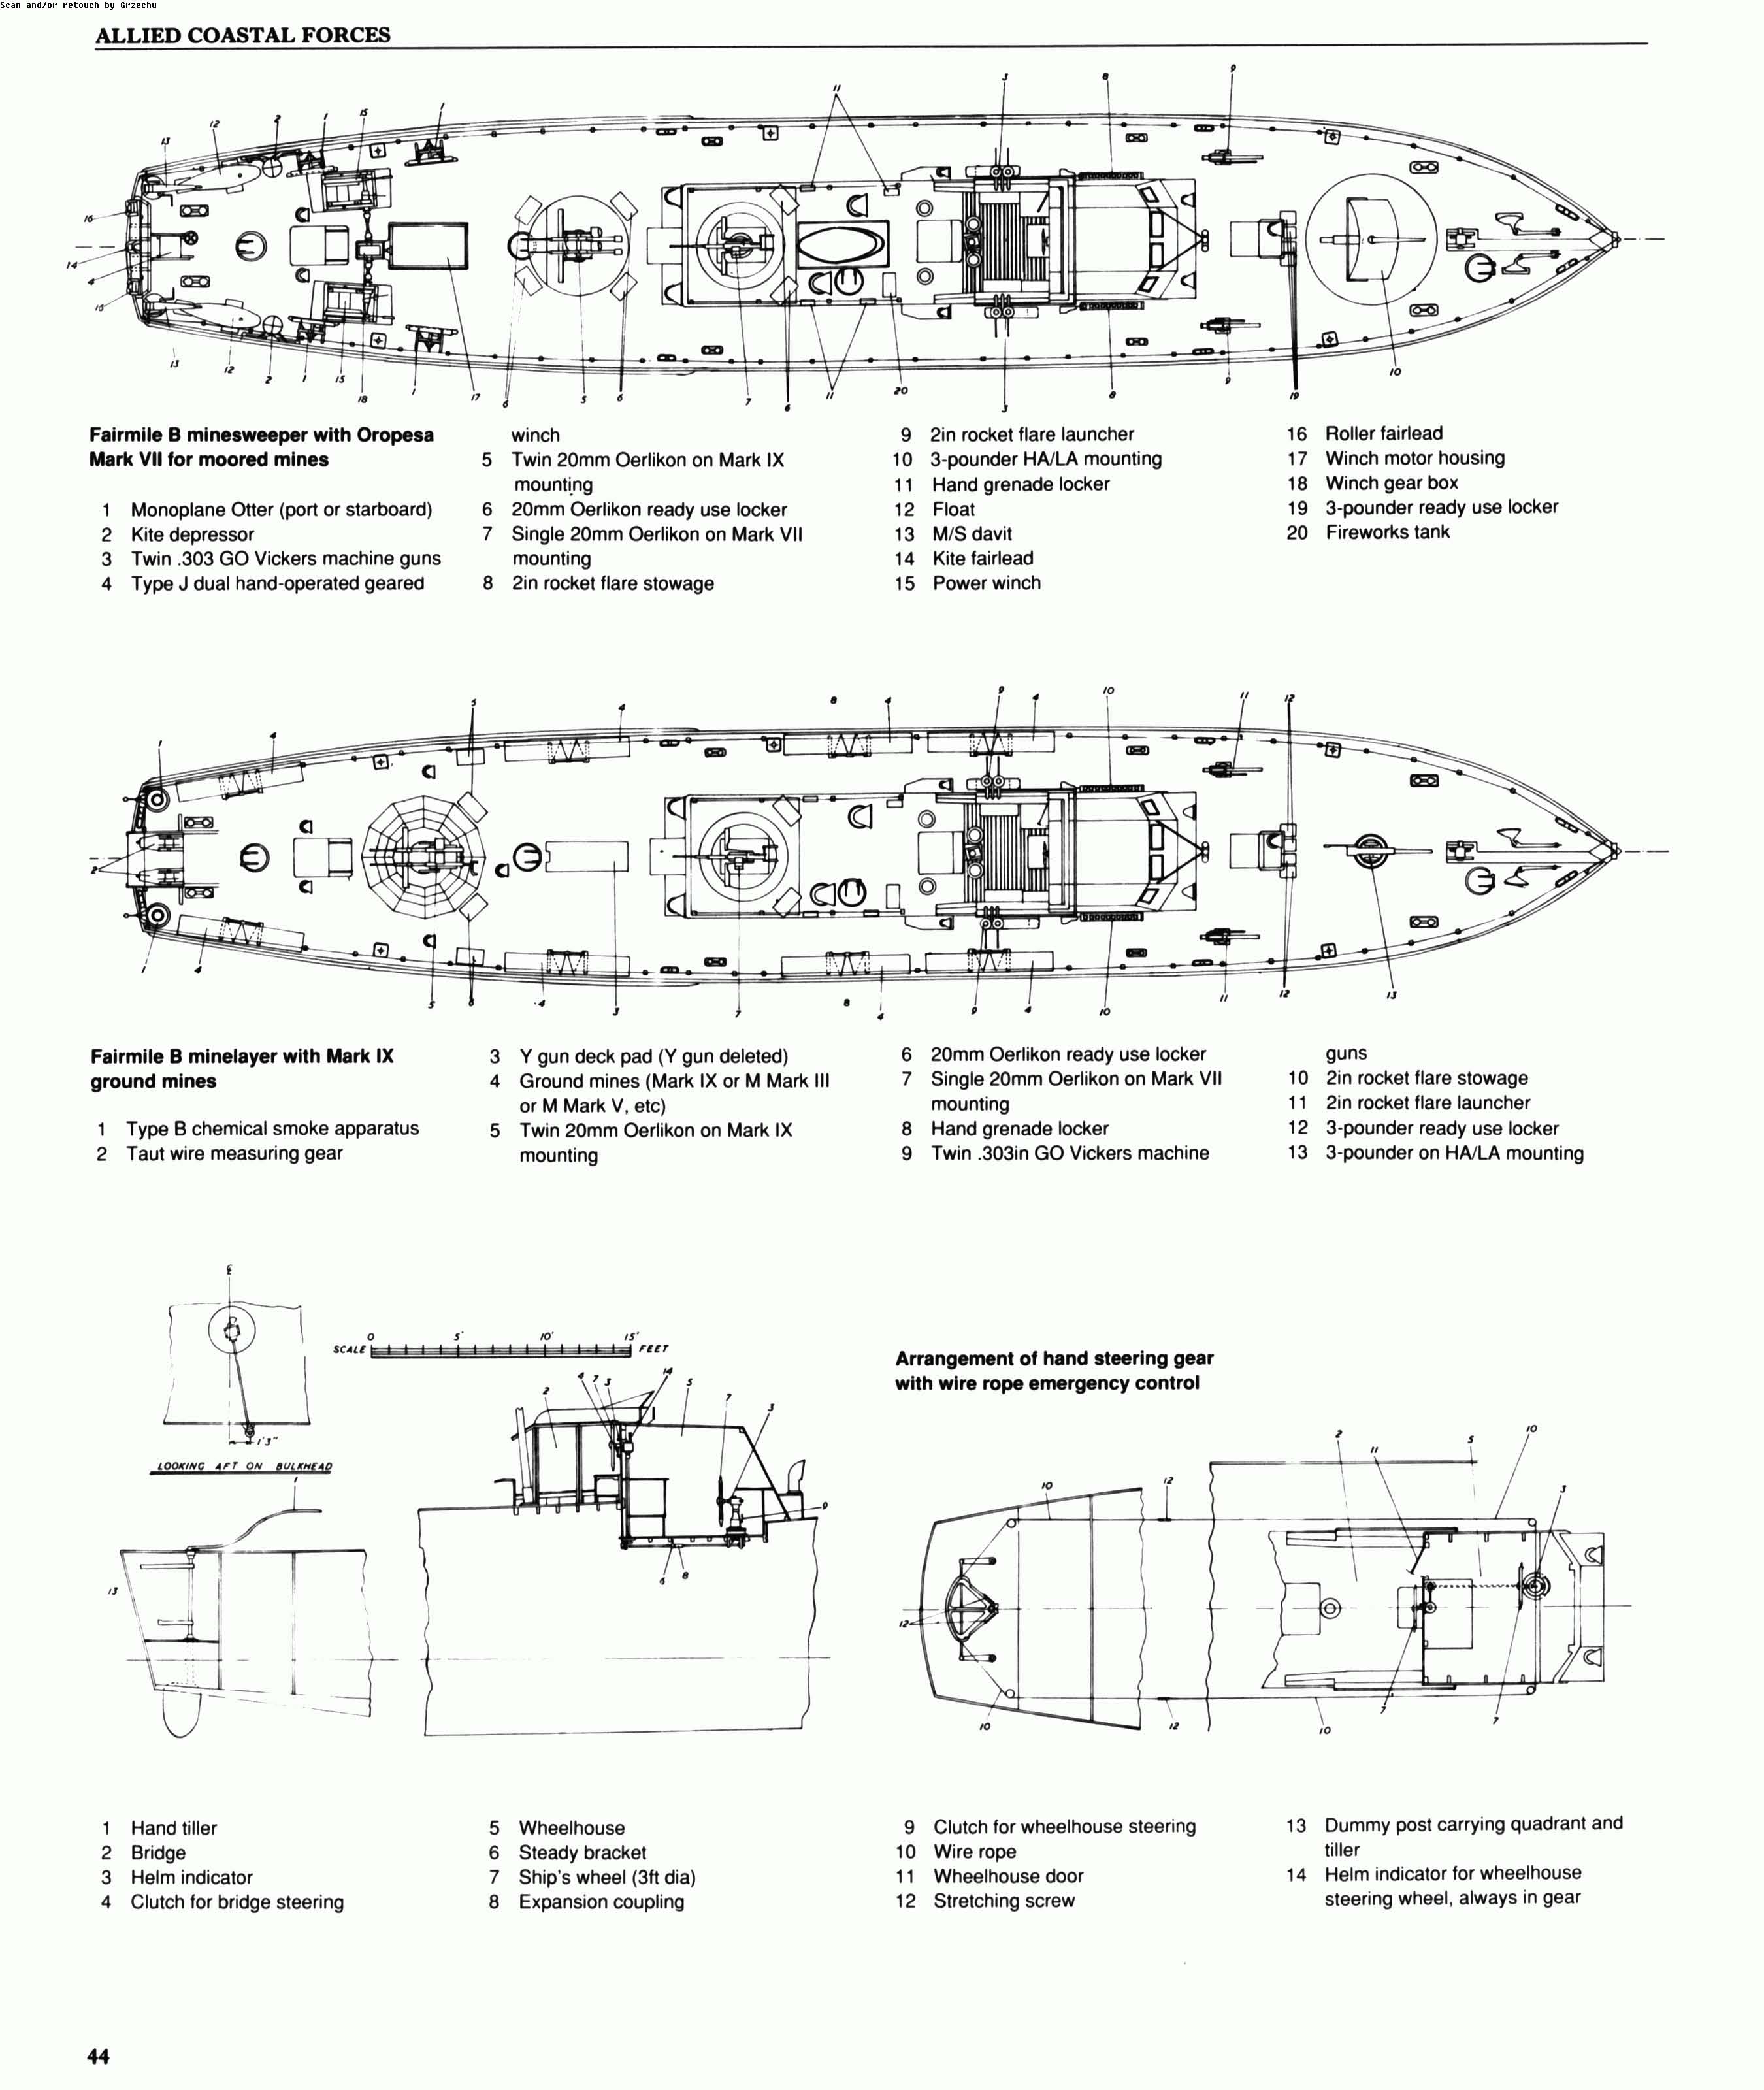 Allied Coastal Forces of World War II (1) Fairmile designs & U.S. submarine chasers_Page_046.jpg